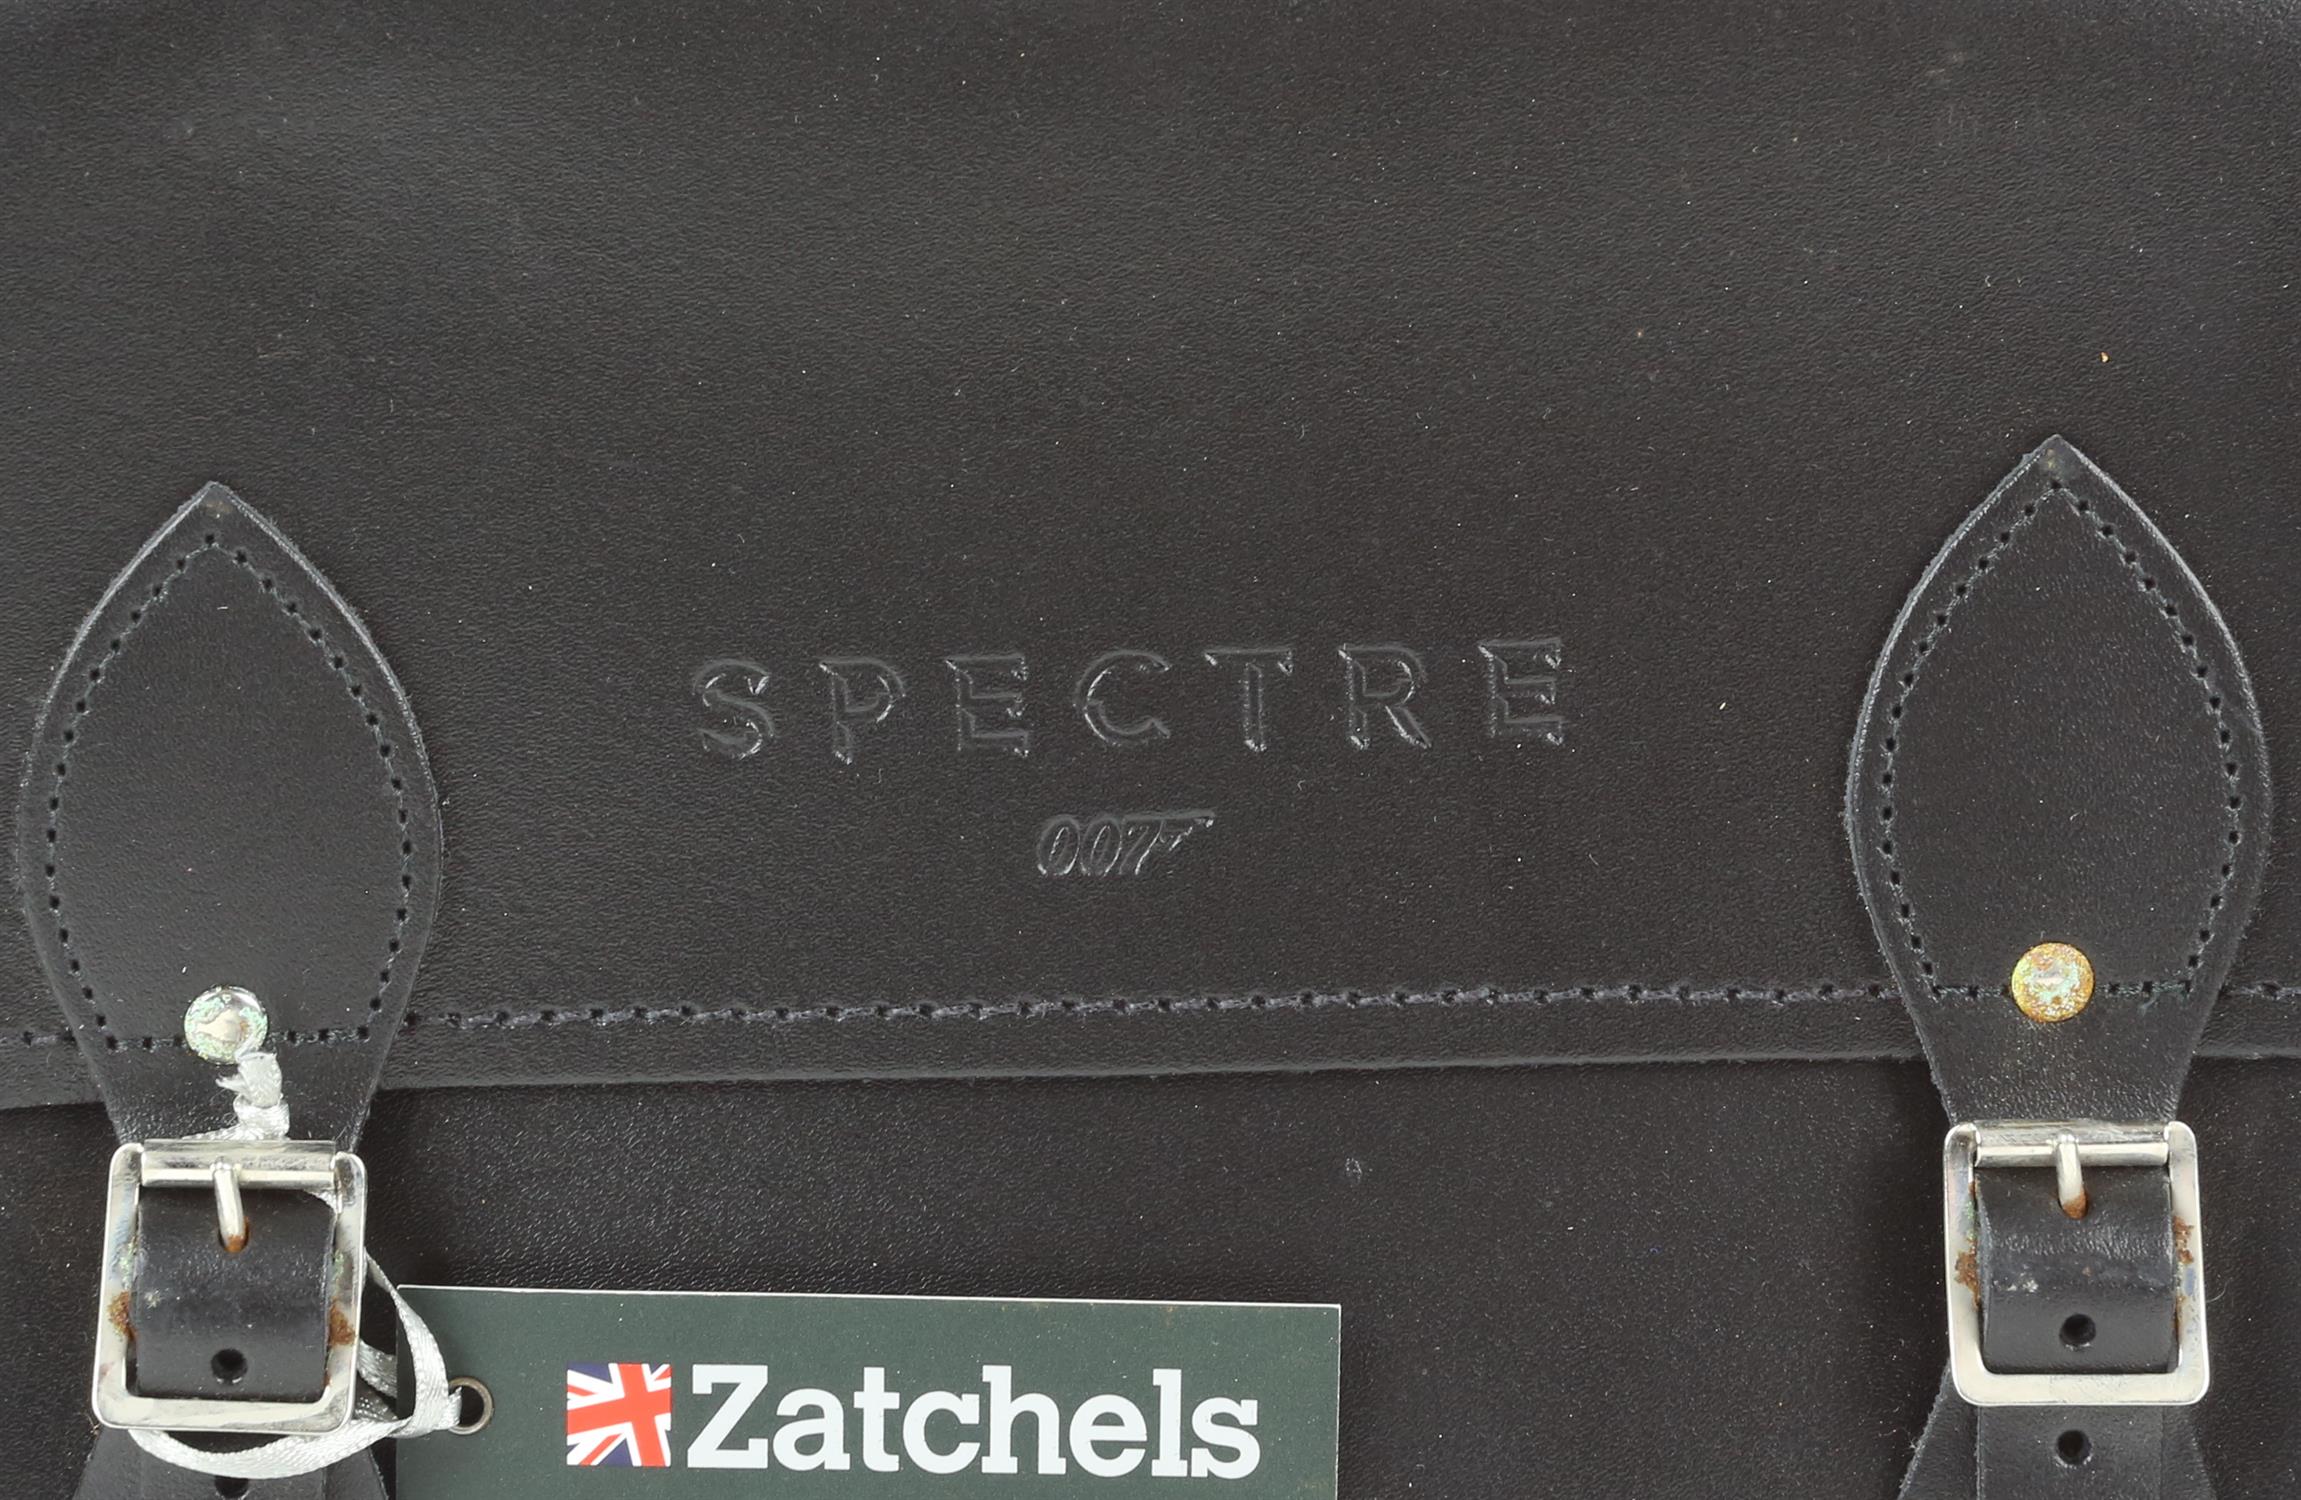 James Bond Spectre (2015) Unused Spectre Zatchels leather satchel with embossed 'Spectre' into - Image 3 of 5